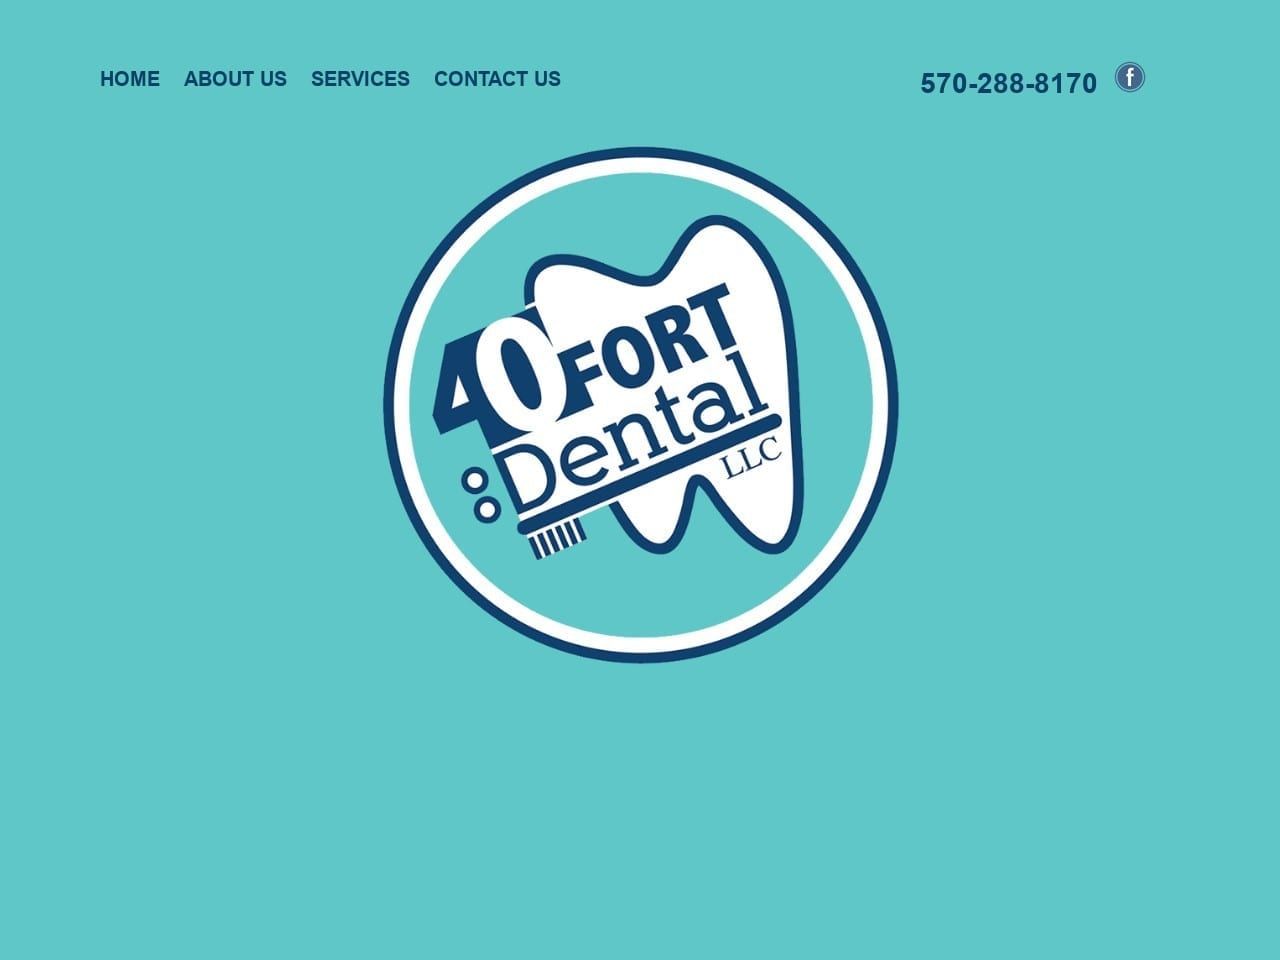 Forty Fort Dental LLC Kelly S. Williams DMD Website Screenshot from fortyfortdental.com